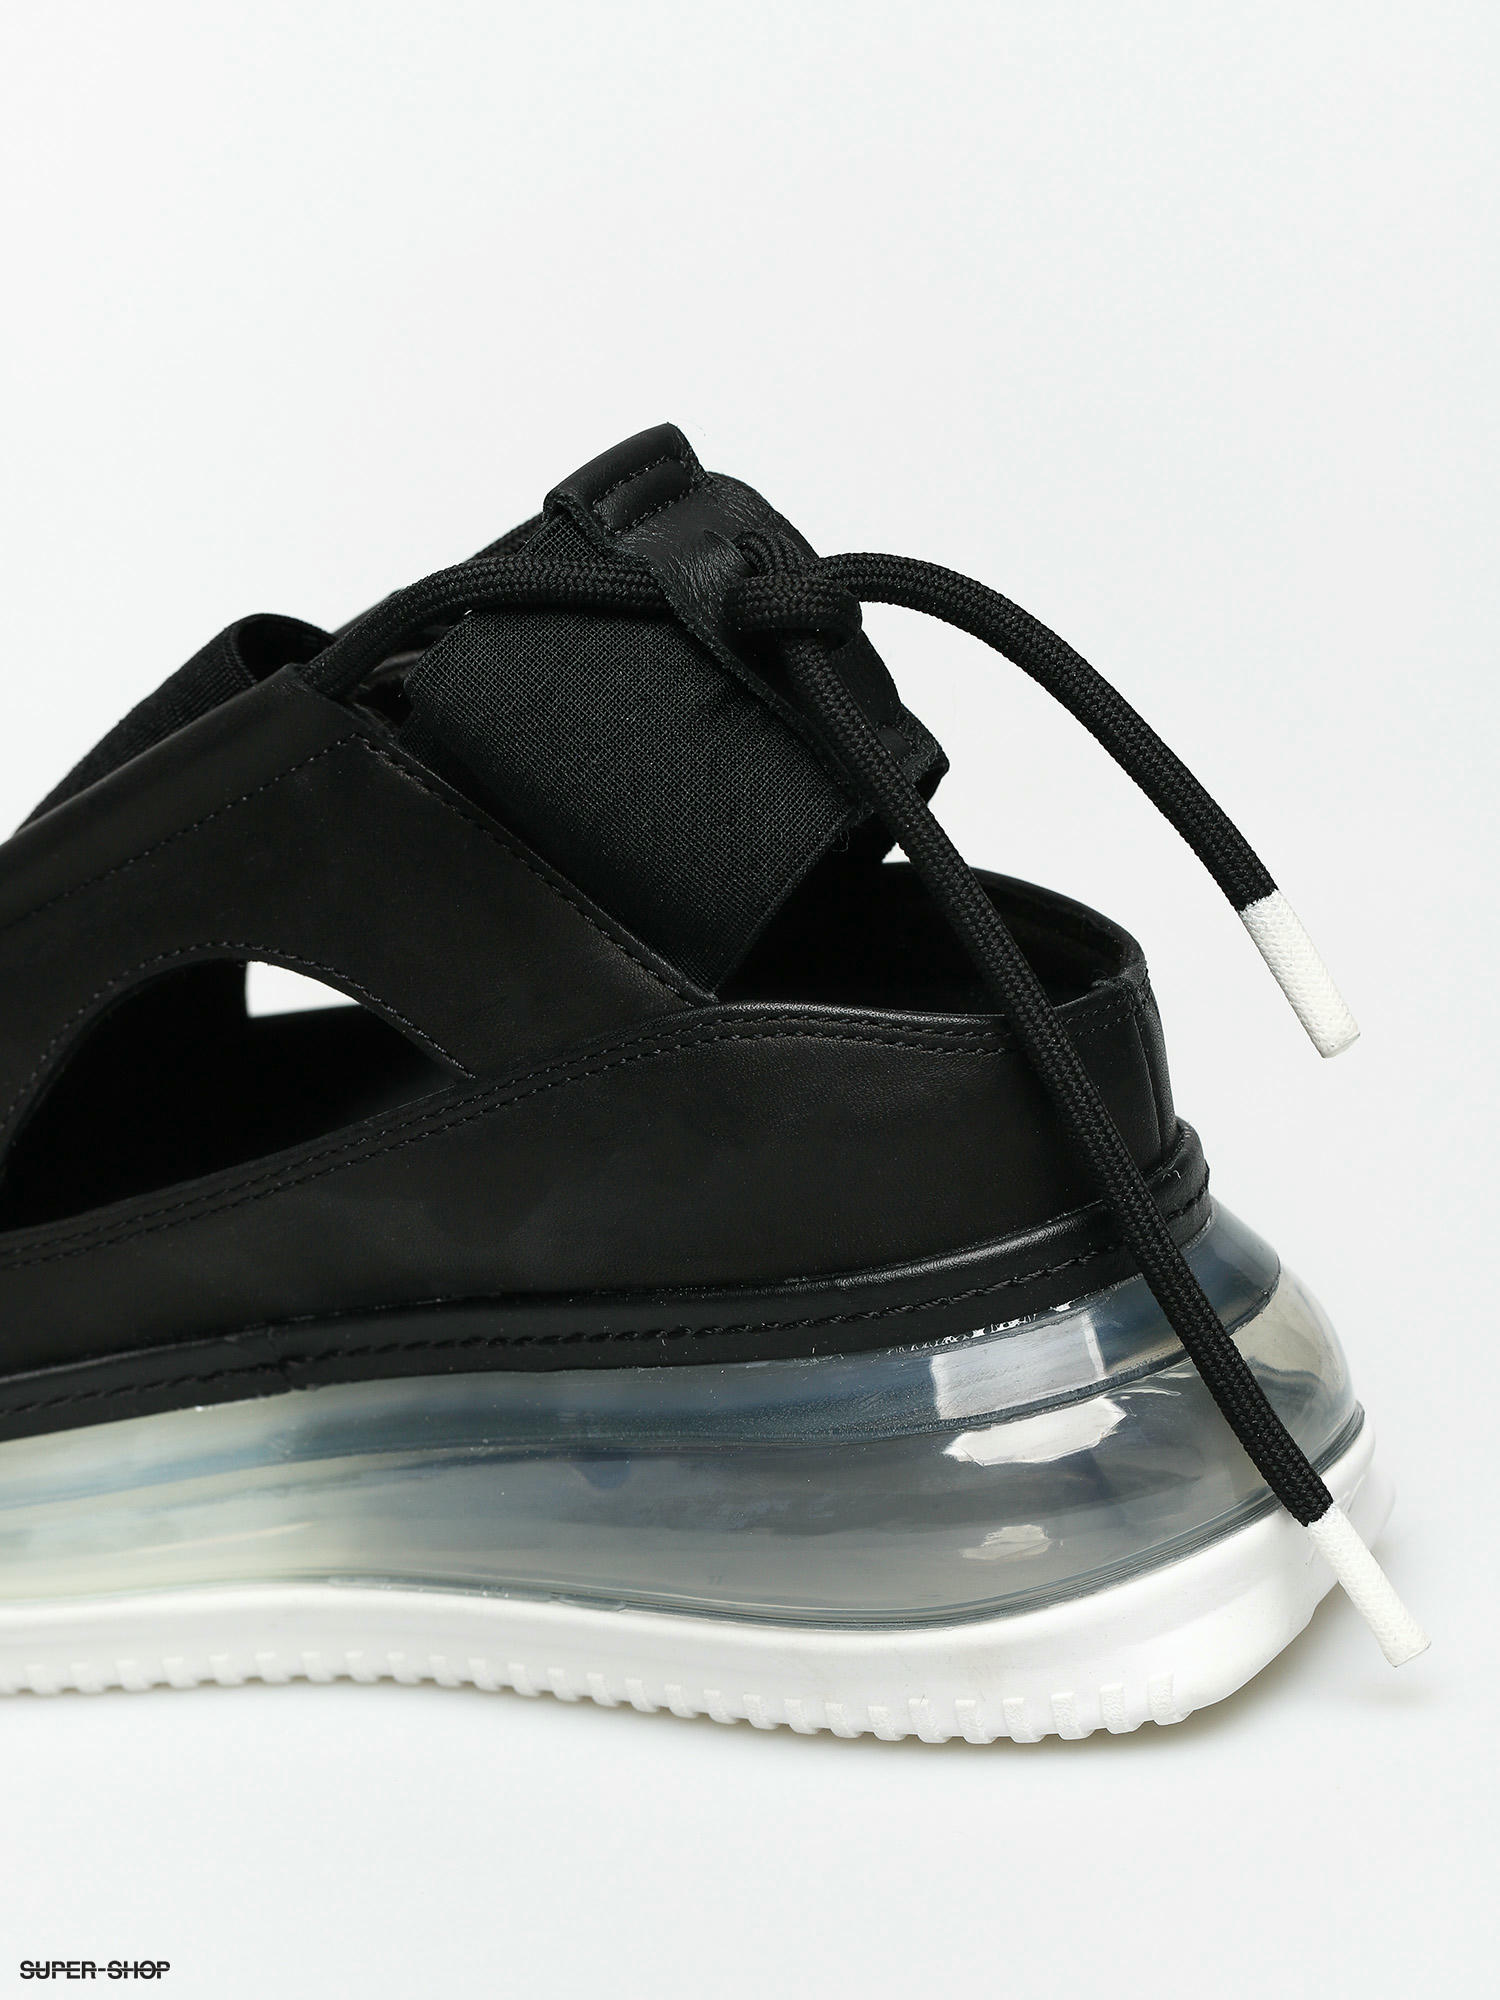 Nike Air Shoes Wmn (black/black royal pulse summit white)